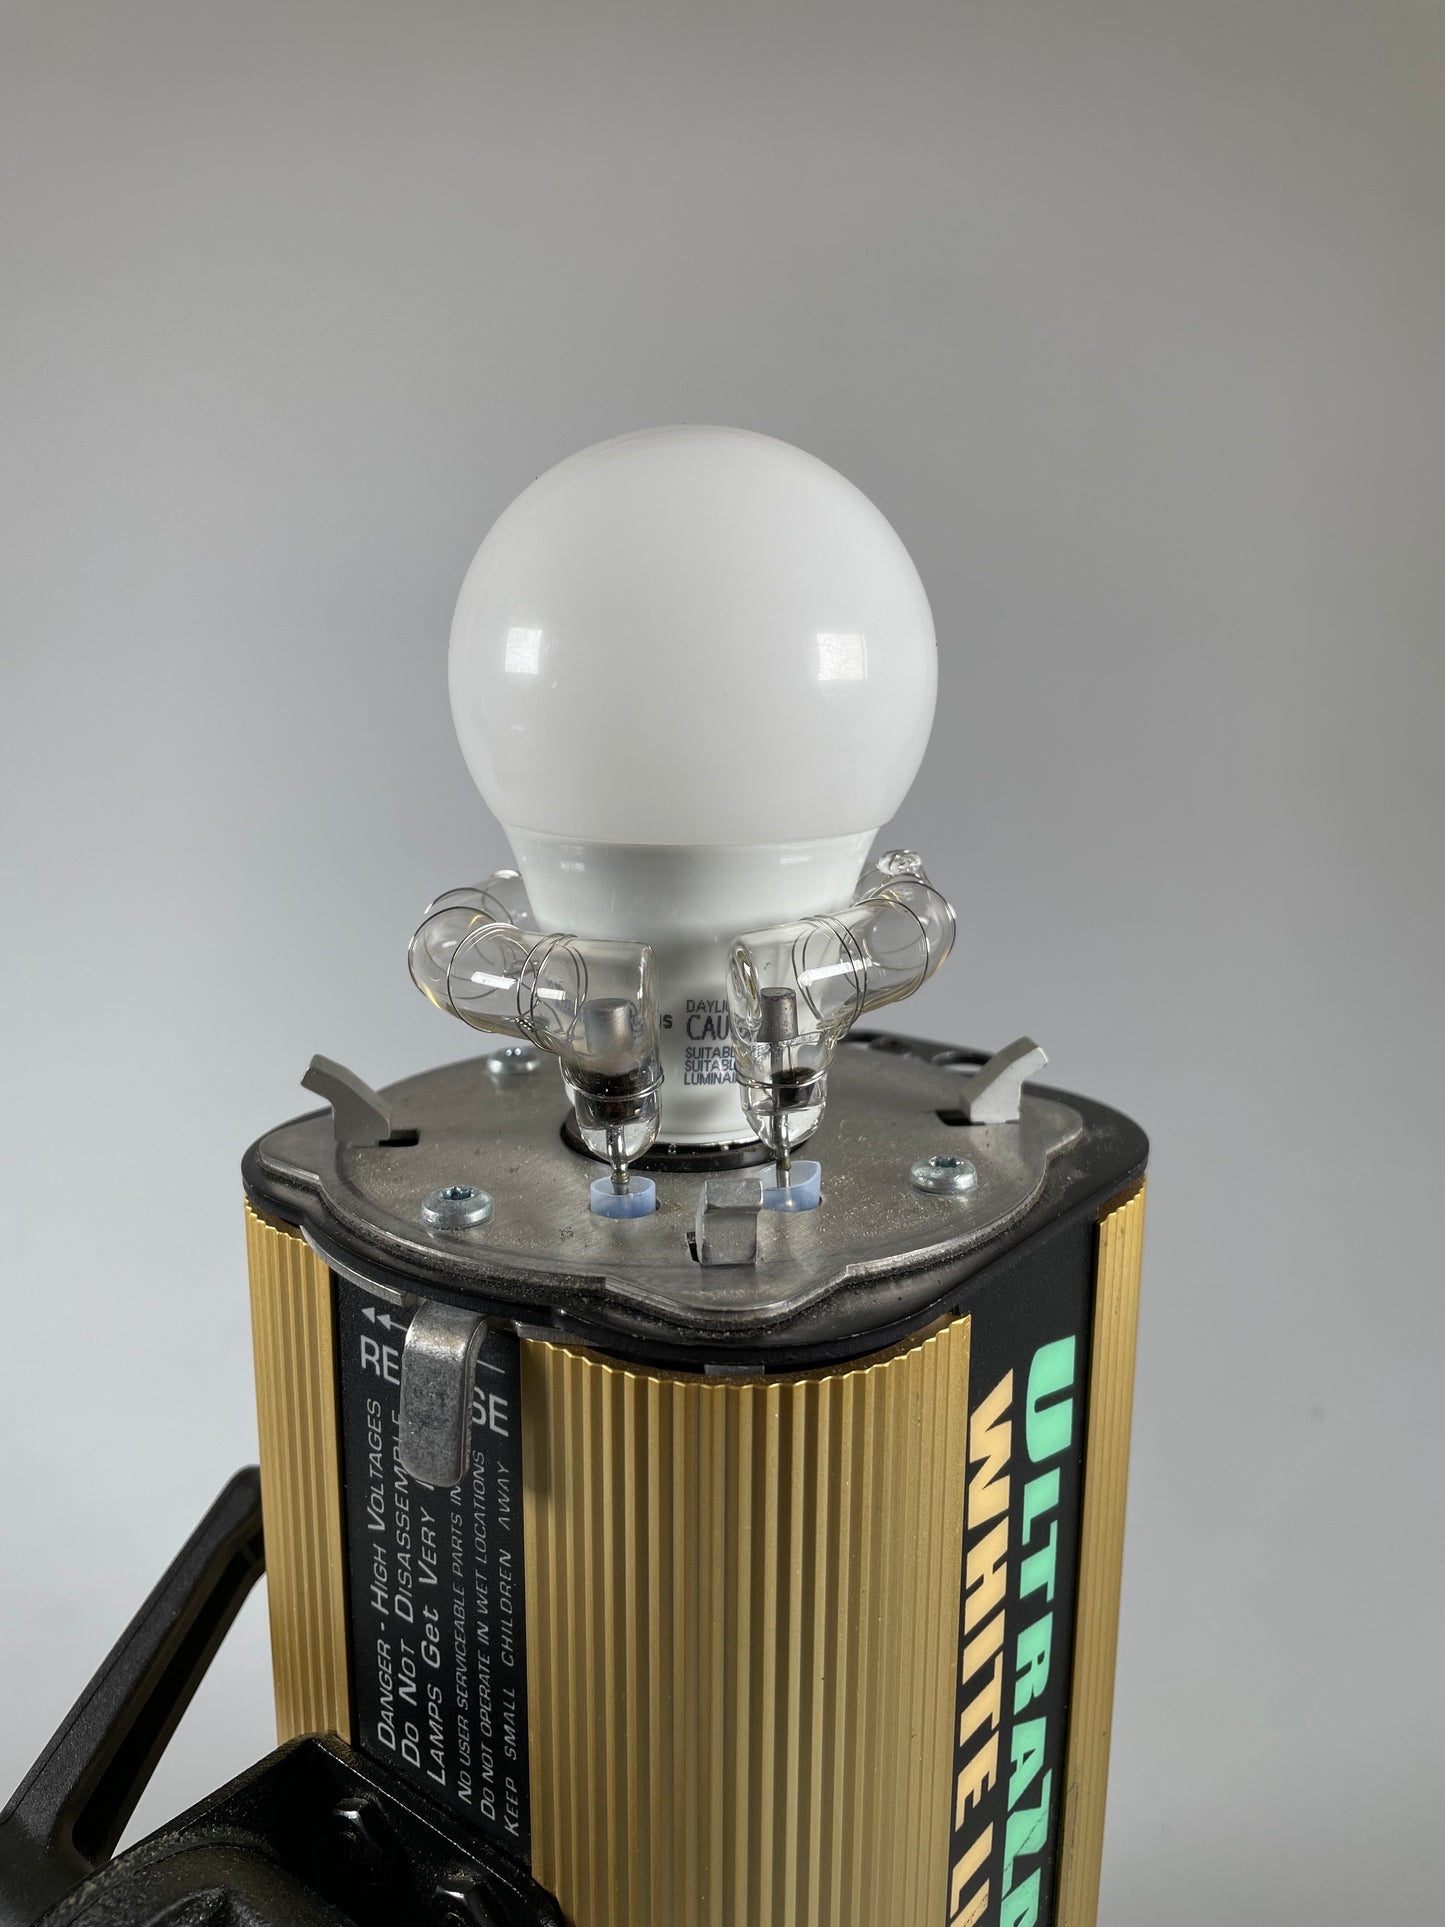 White Lightning UltraZap 800 Paul C Buff Monolight Flash Unit with Cord and Reflector